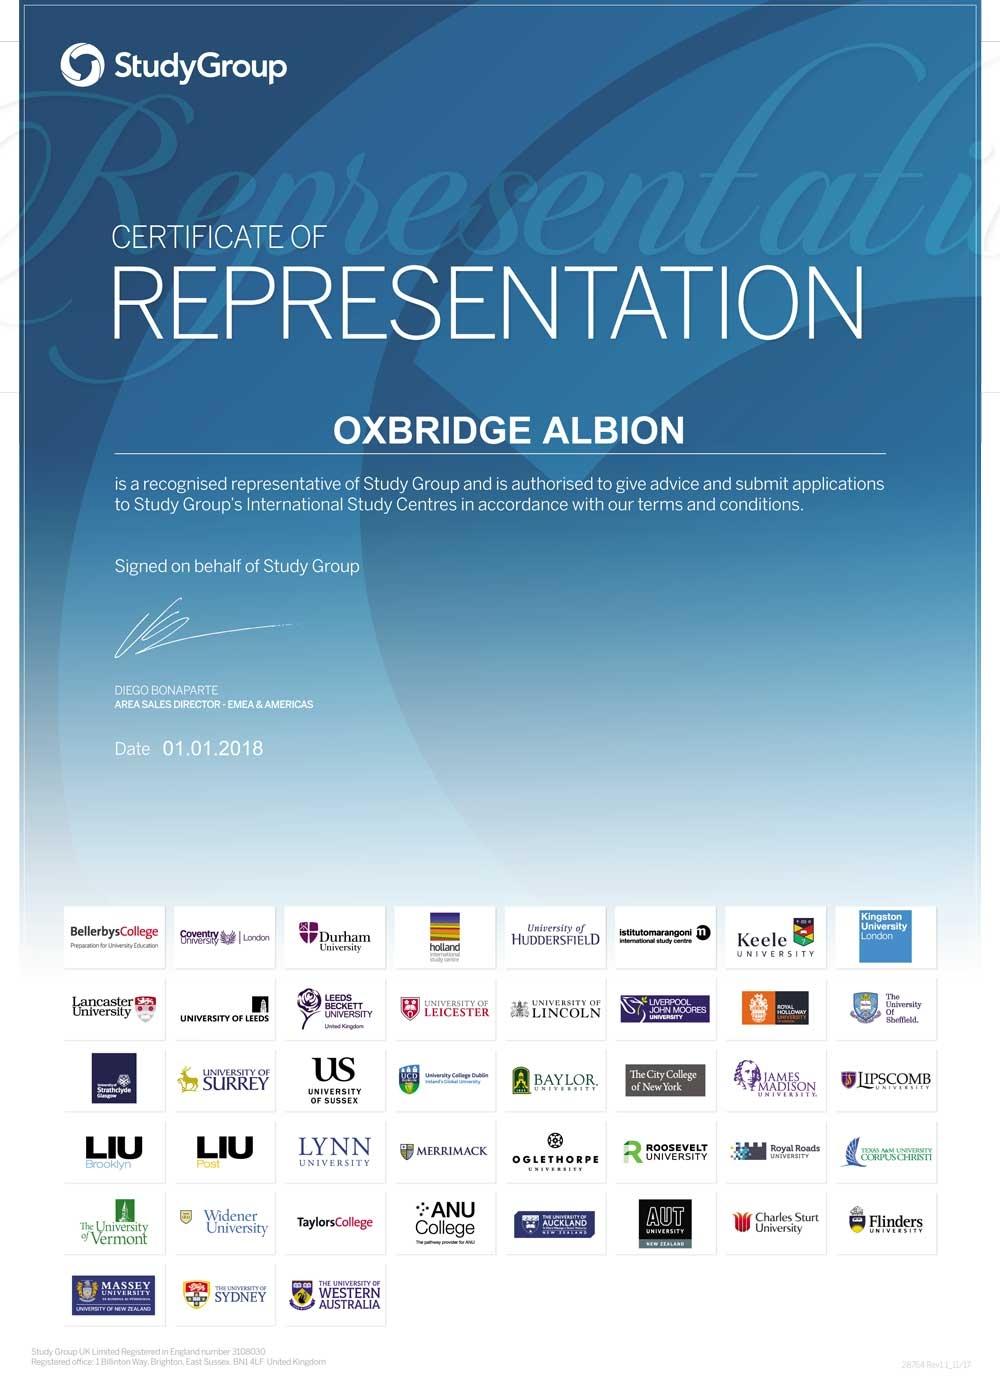 Oxbridge_Representation-certificate-2018.jpg